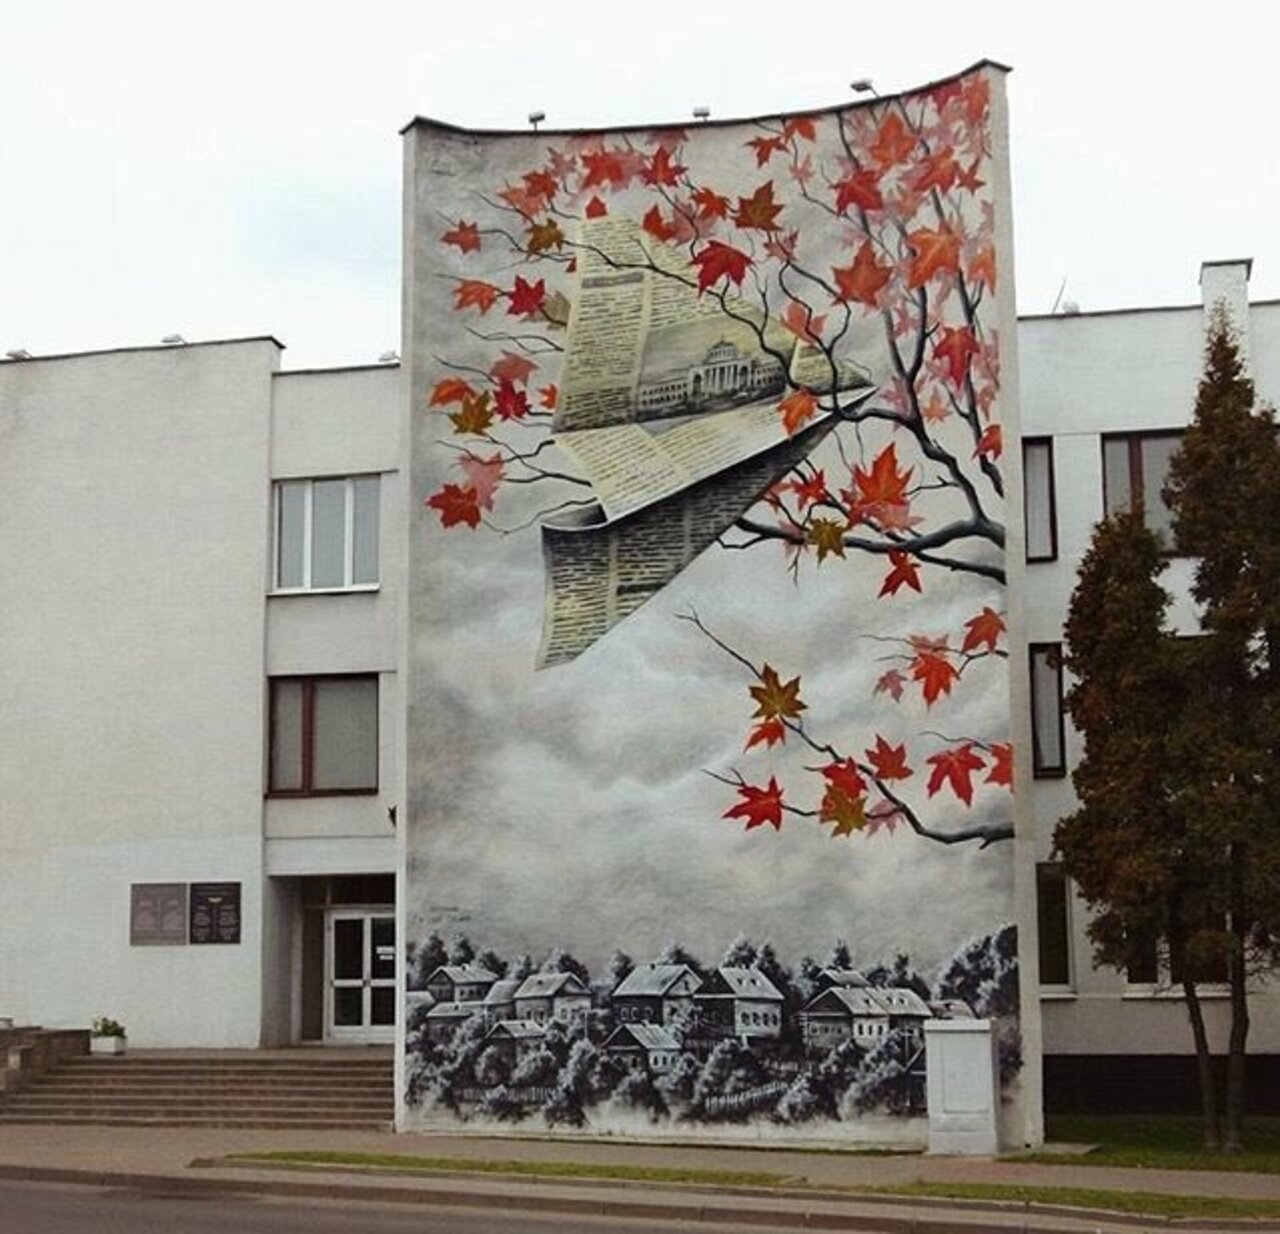 New Street Art by MUTUS in Belarus 

#art #graffiti #mural #streetart https://t.co/ztLCLPkmPQ